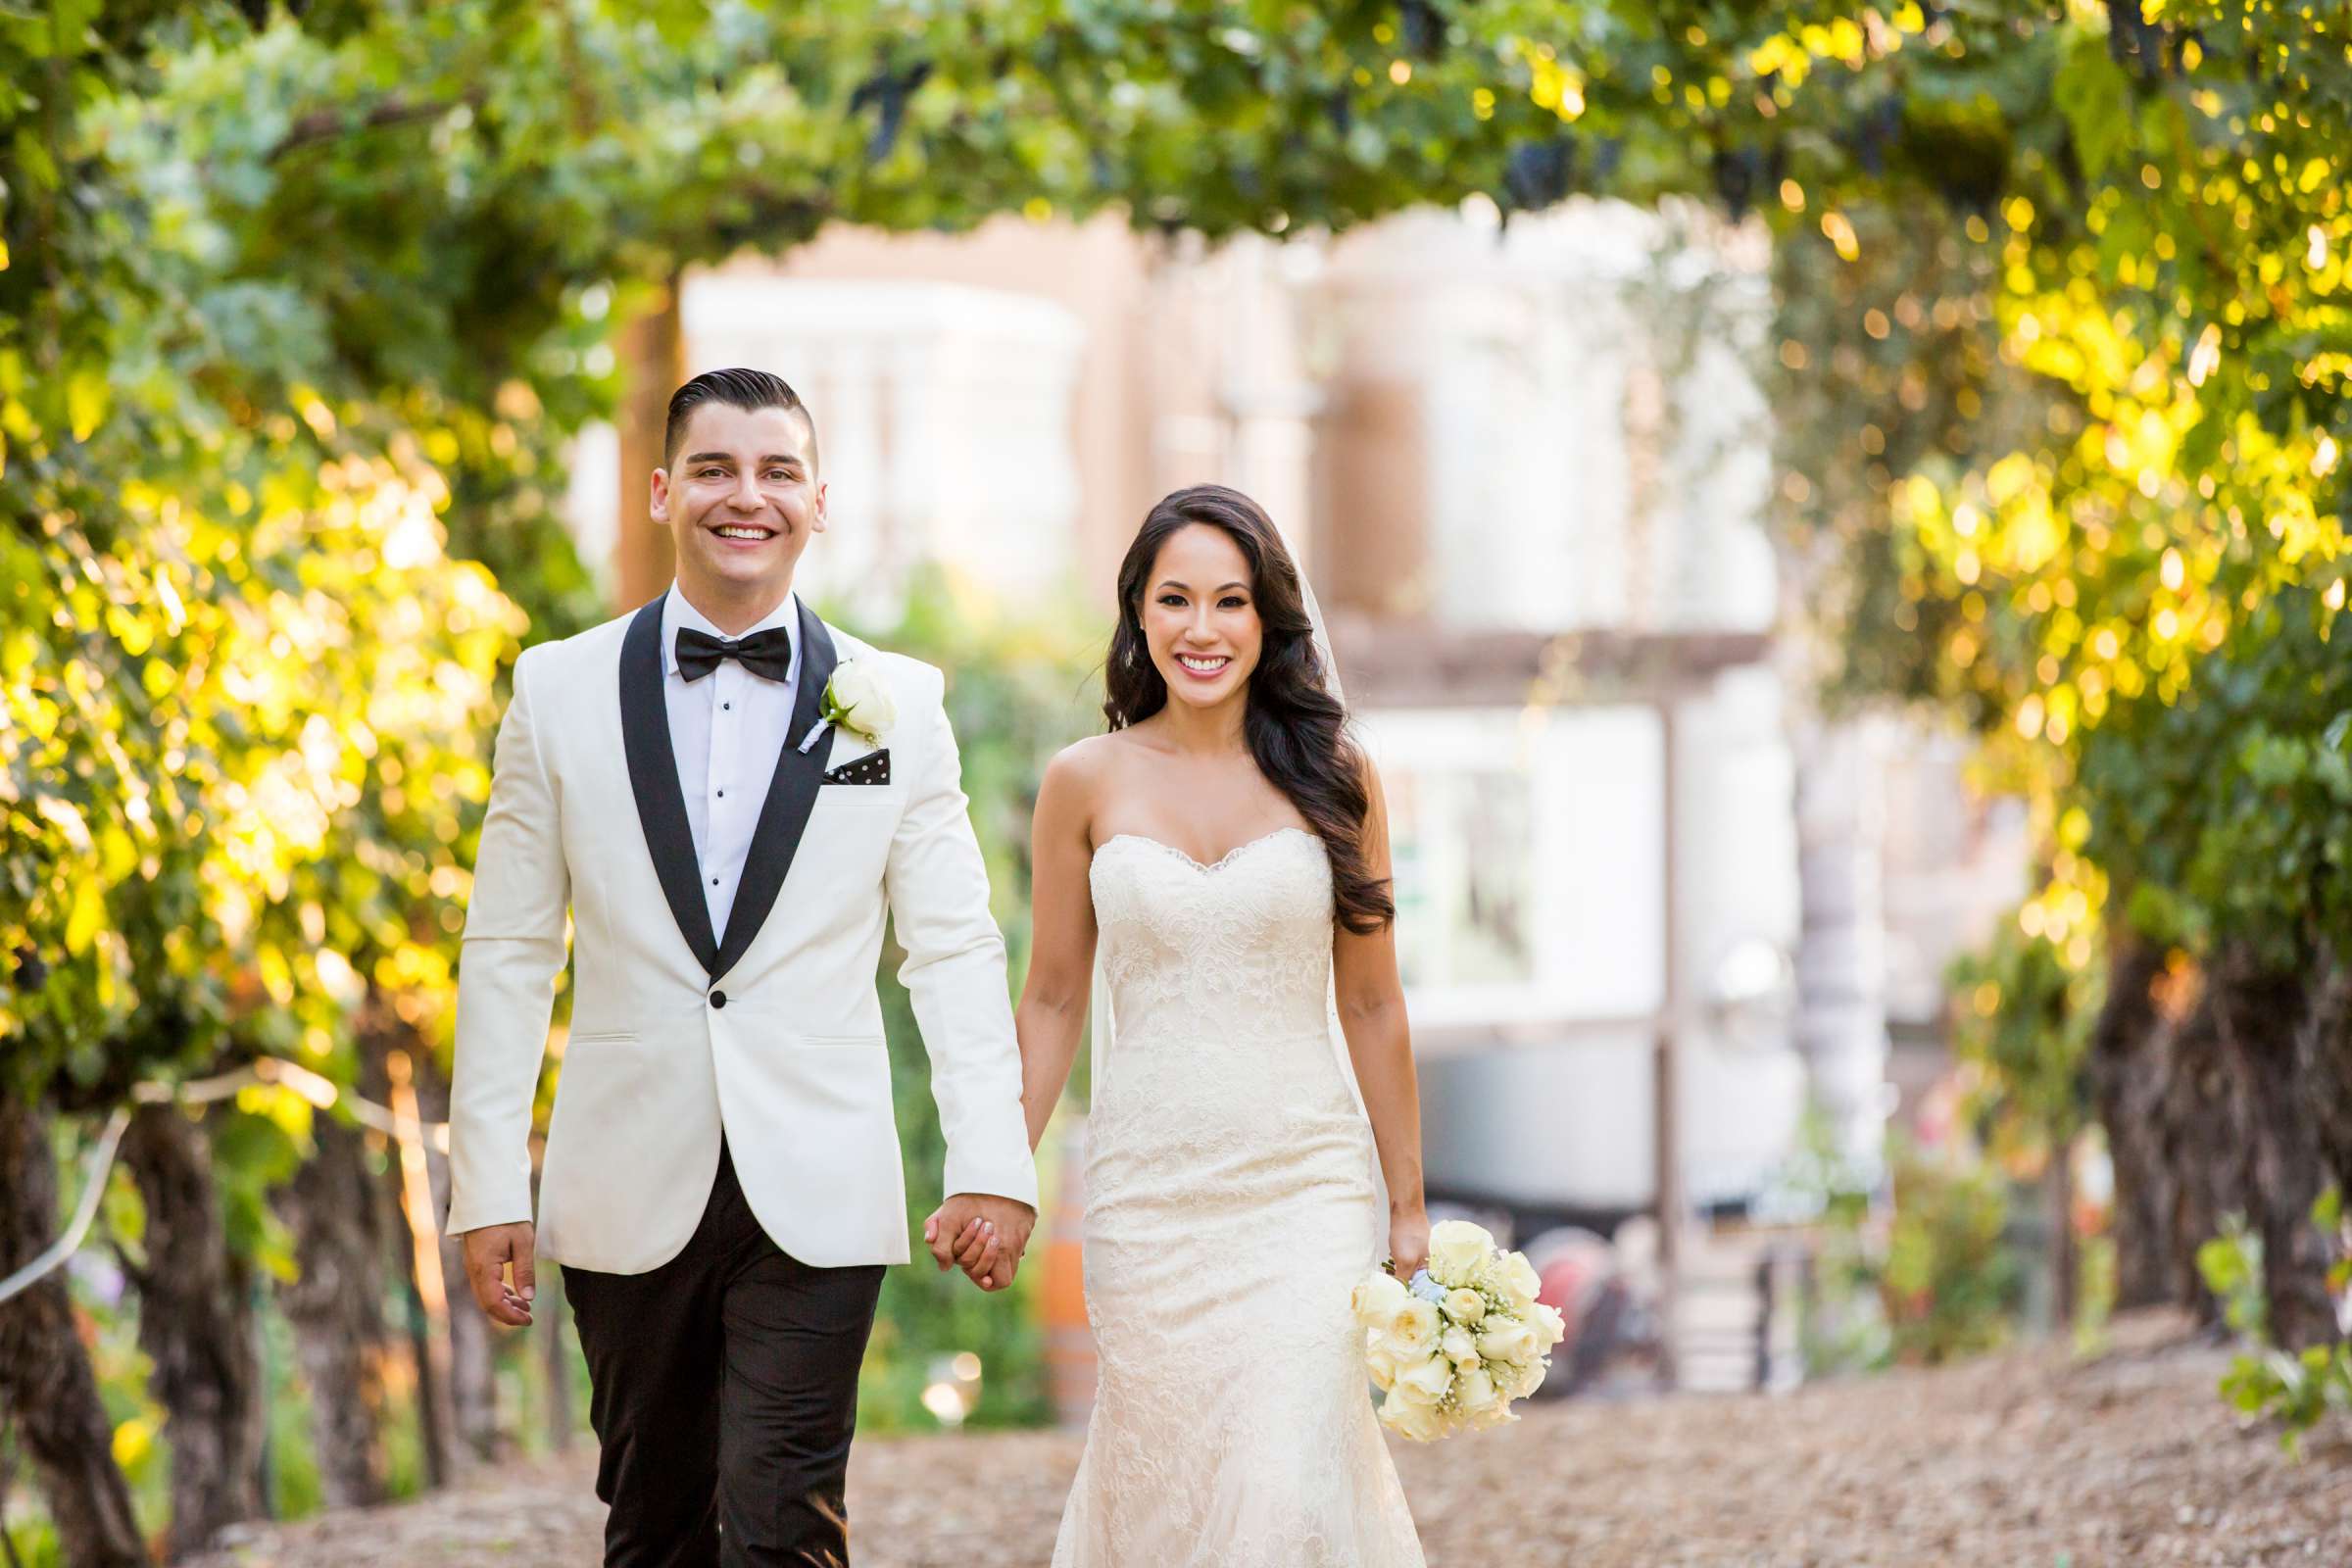 Wilson Creek Winery Wedding, Quynhnhi and Jacob Wedding Photo #2 by True Photography